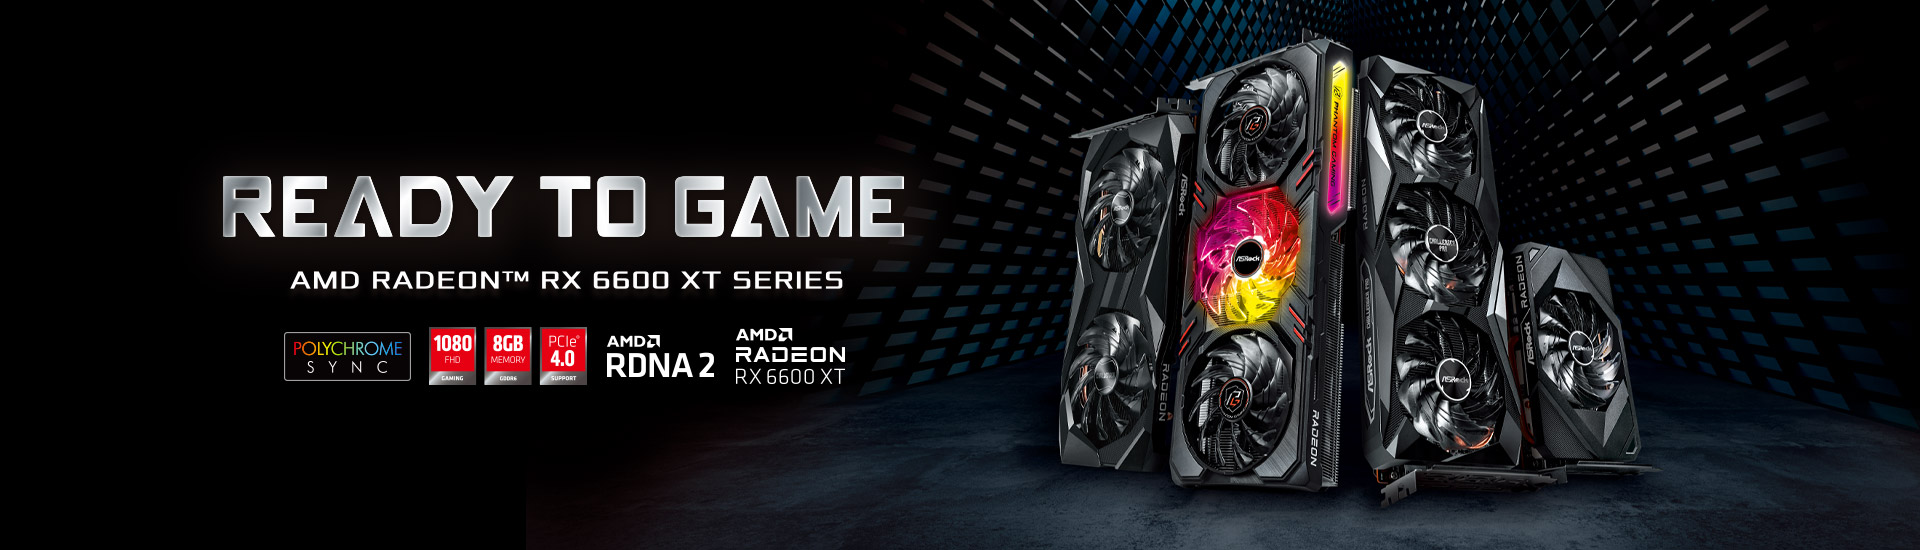 AMD Radeon RX 6600 XT Series